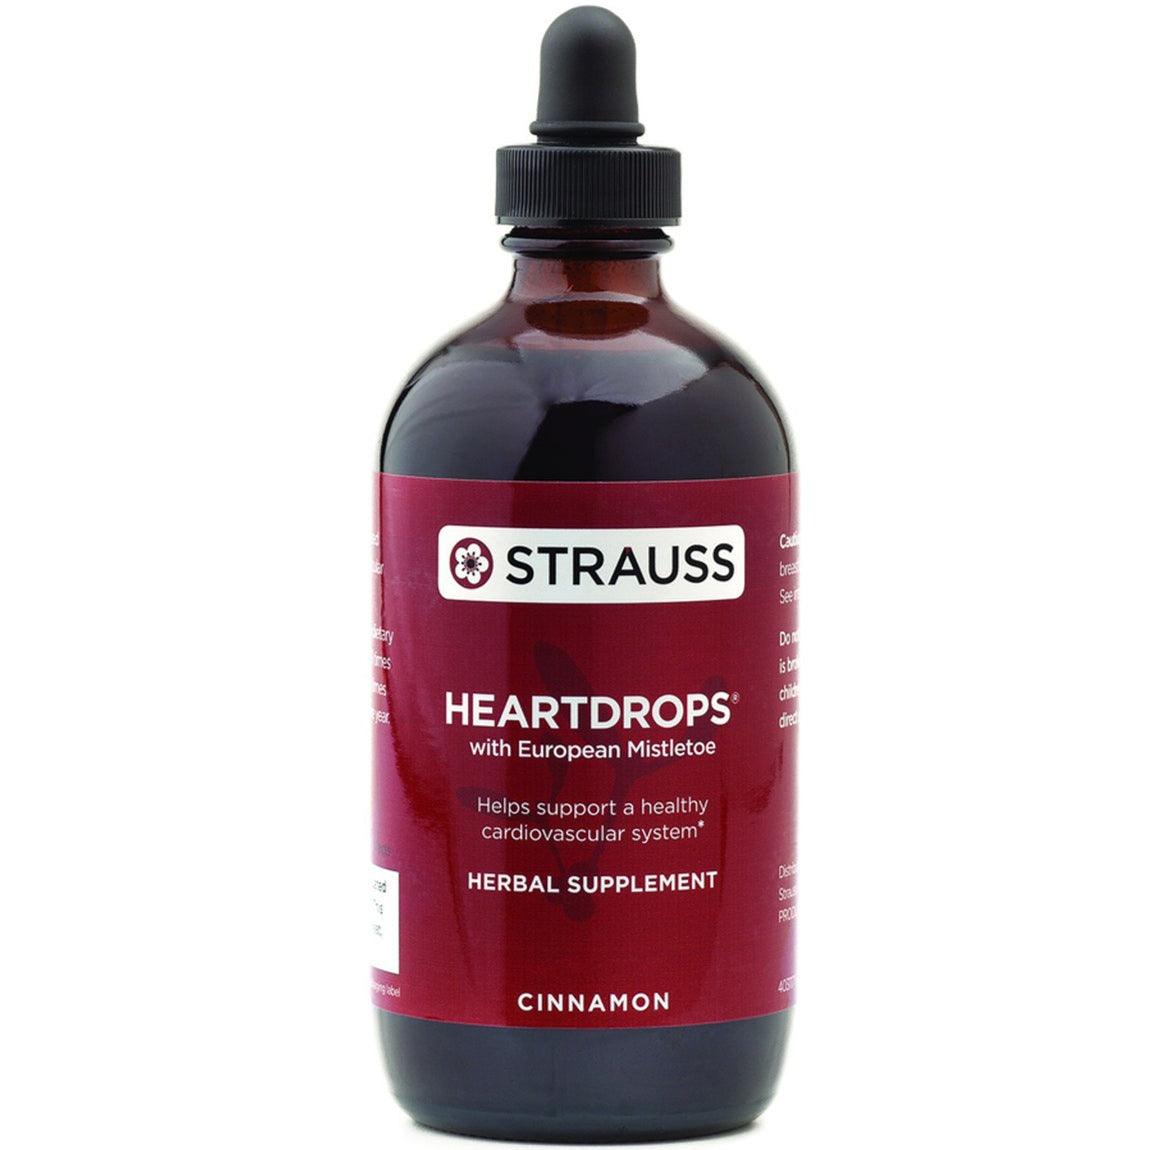 Strauss Heartdrops Cinnamon Herbal Heart Supplement 225mL Supplements - Cardiovascular Health at Village Vitamin Store